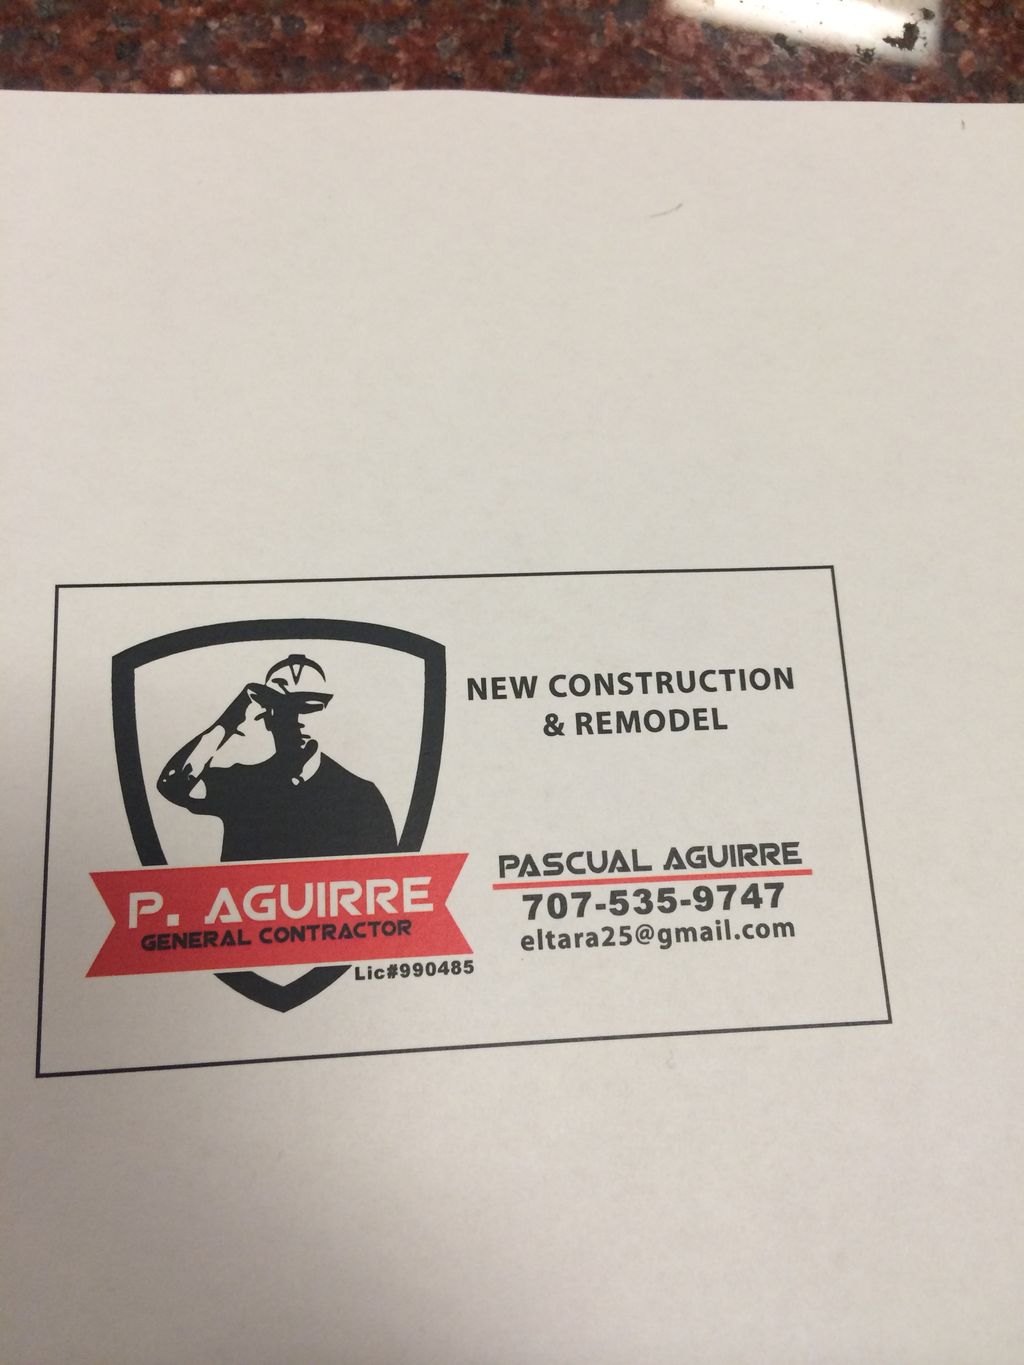 P. Aguirre General Contractor, Inc.